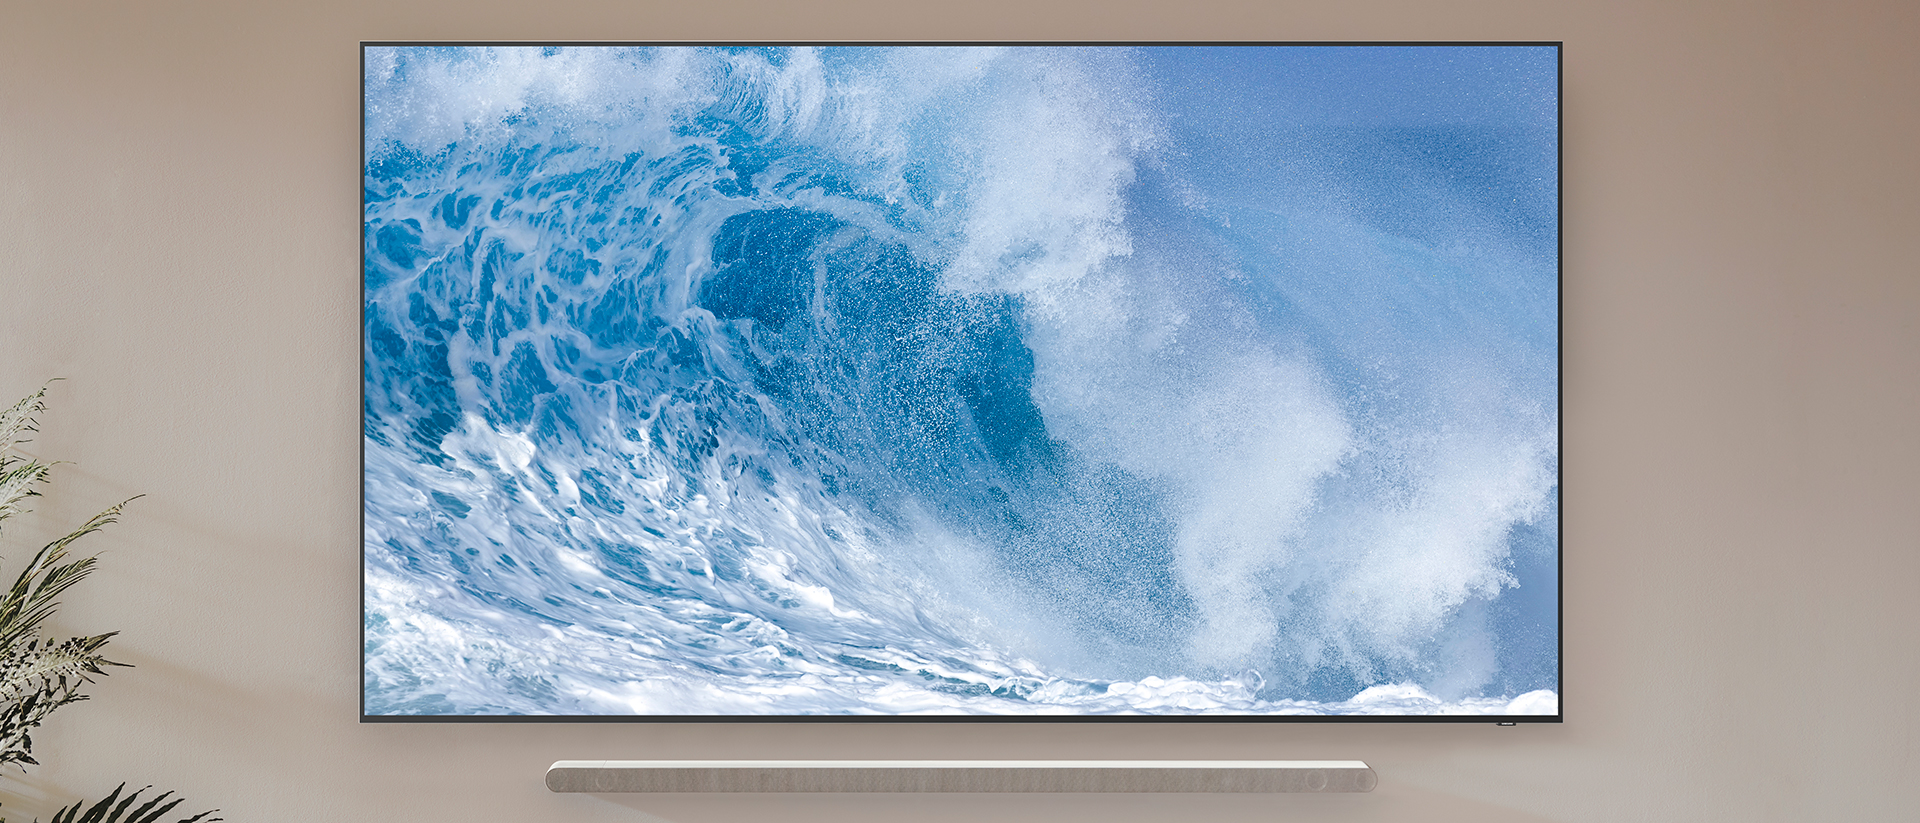 Samsung QN900B Neo QLED 8K TV displaying a wave